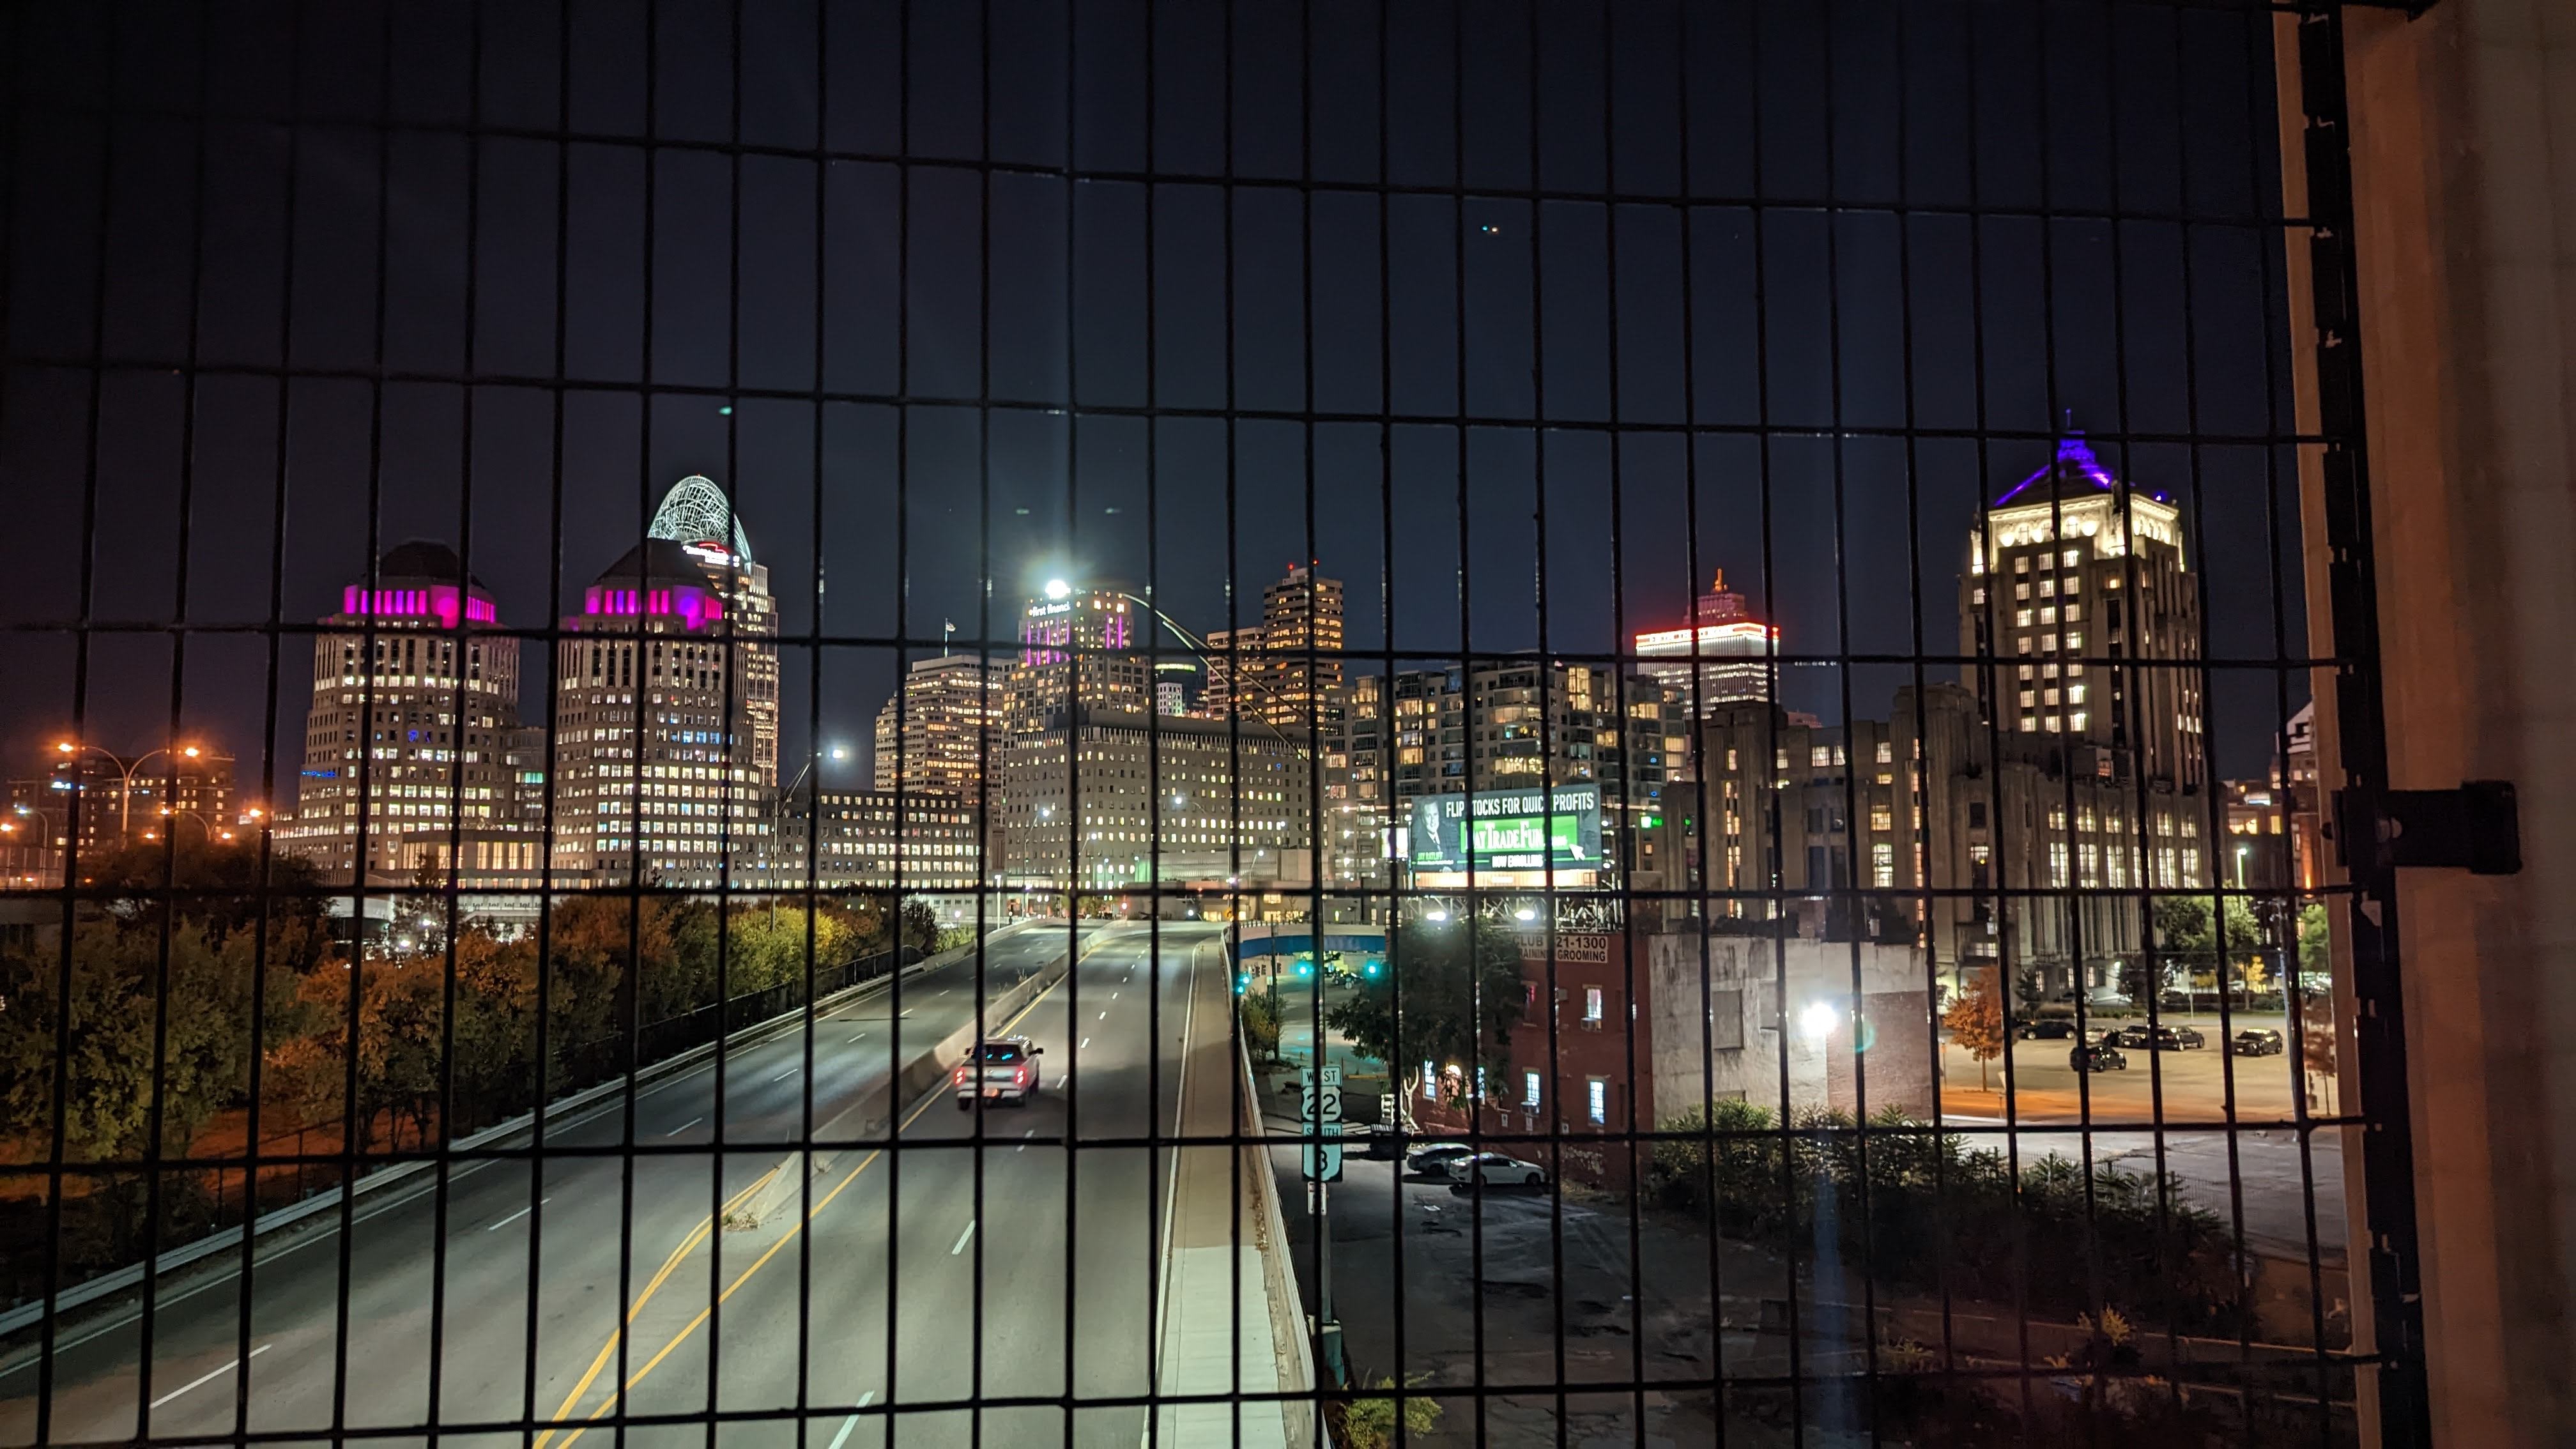 View of the Cincinnati skyline looking south on the court street steps bridge